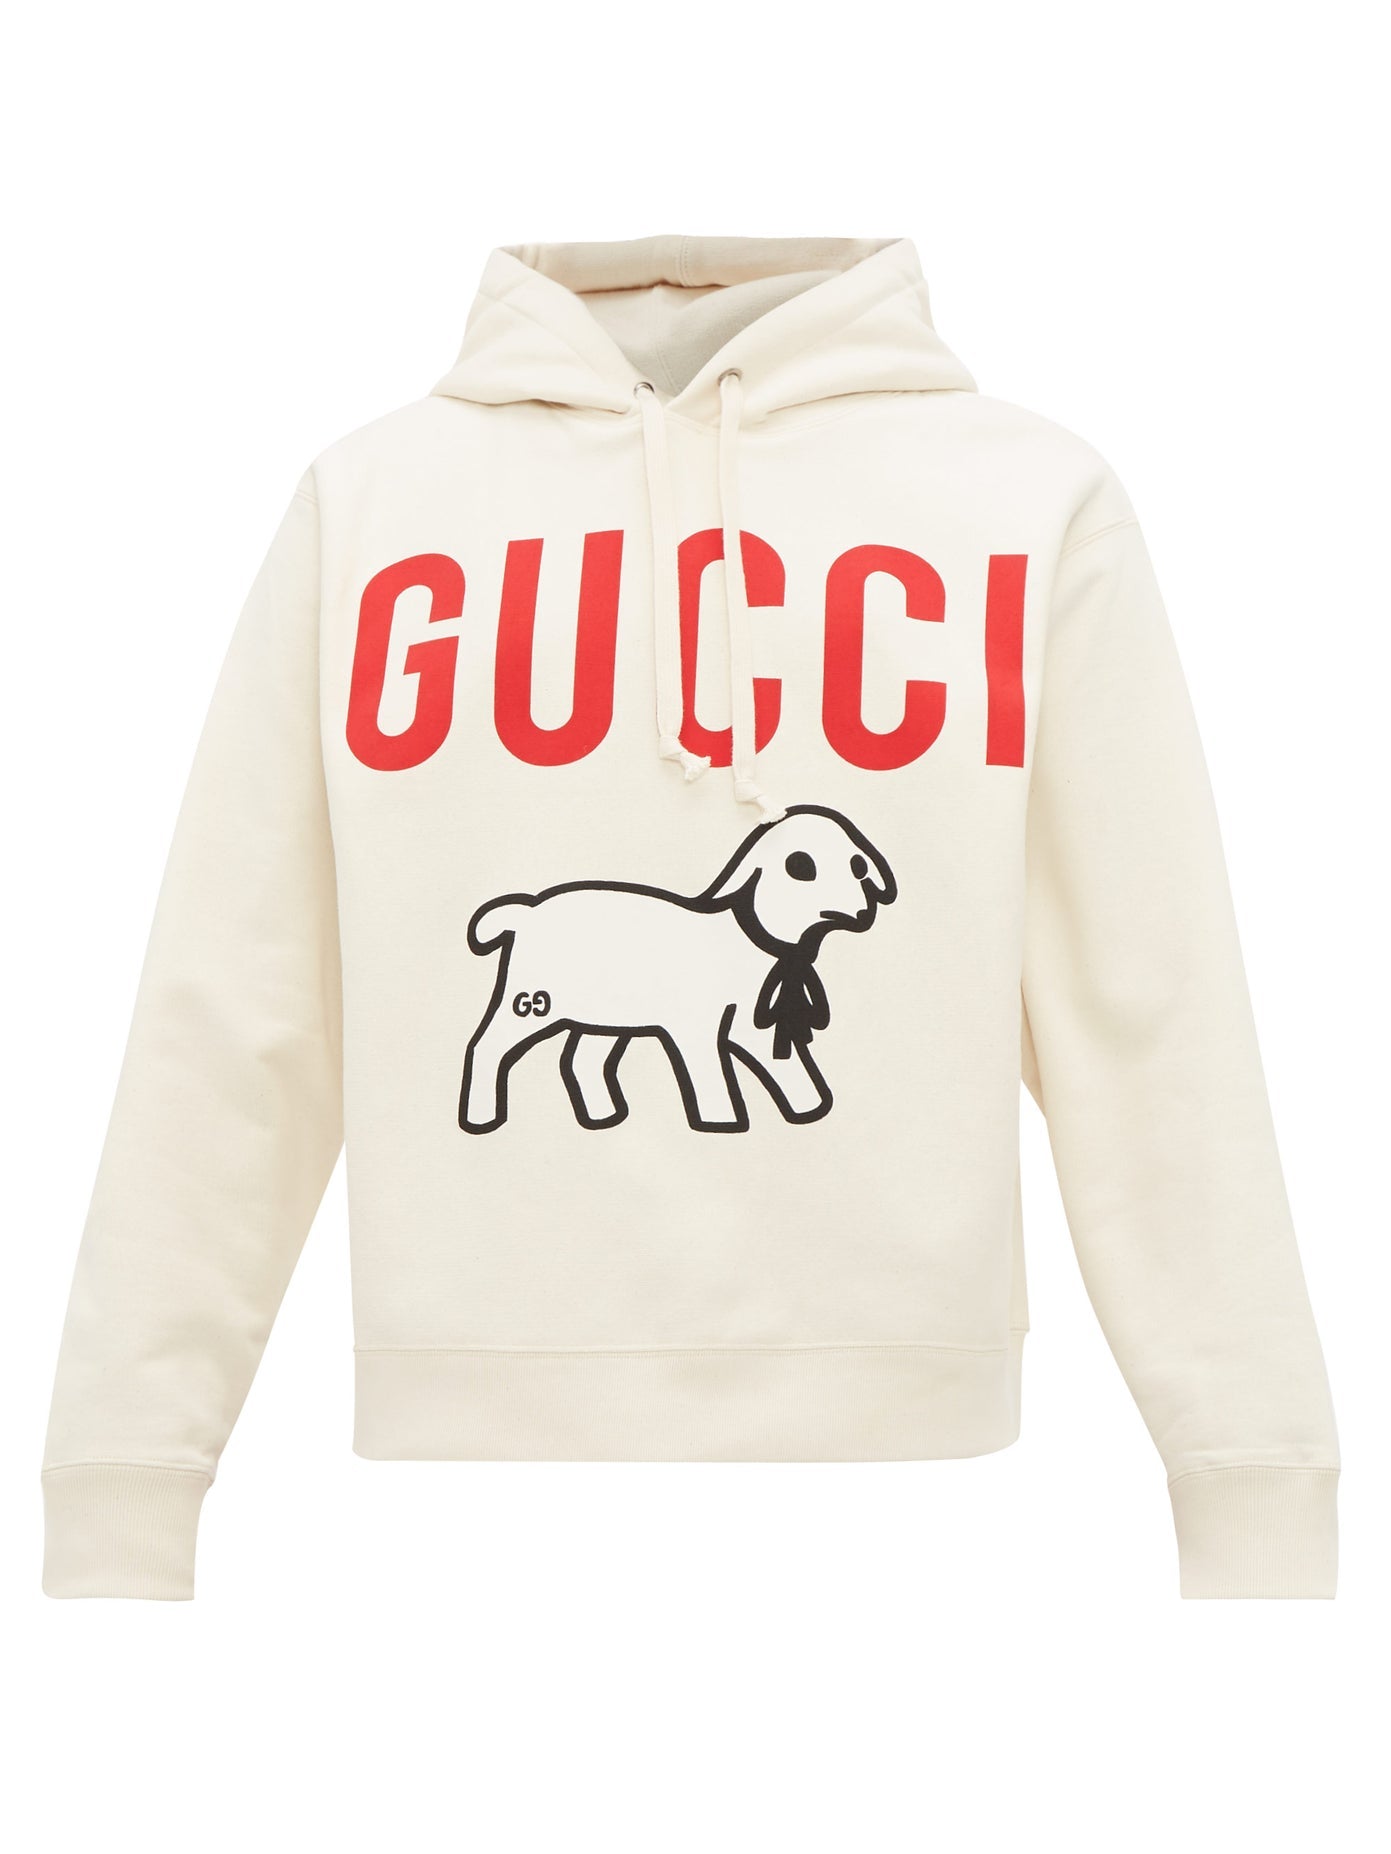 Gucci Lamb and Logo Cotton Hoodie sweatshirt